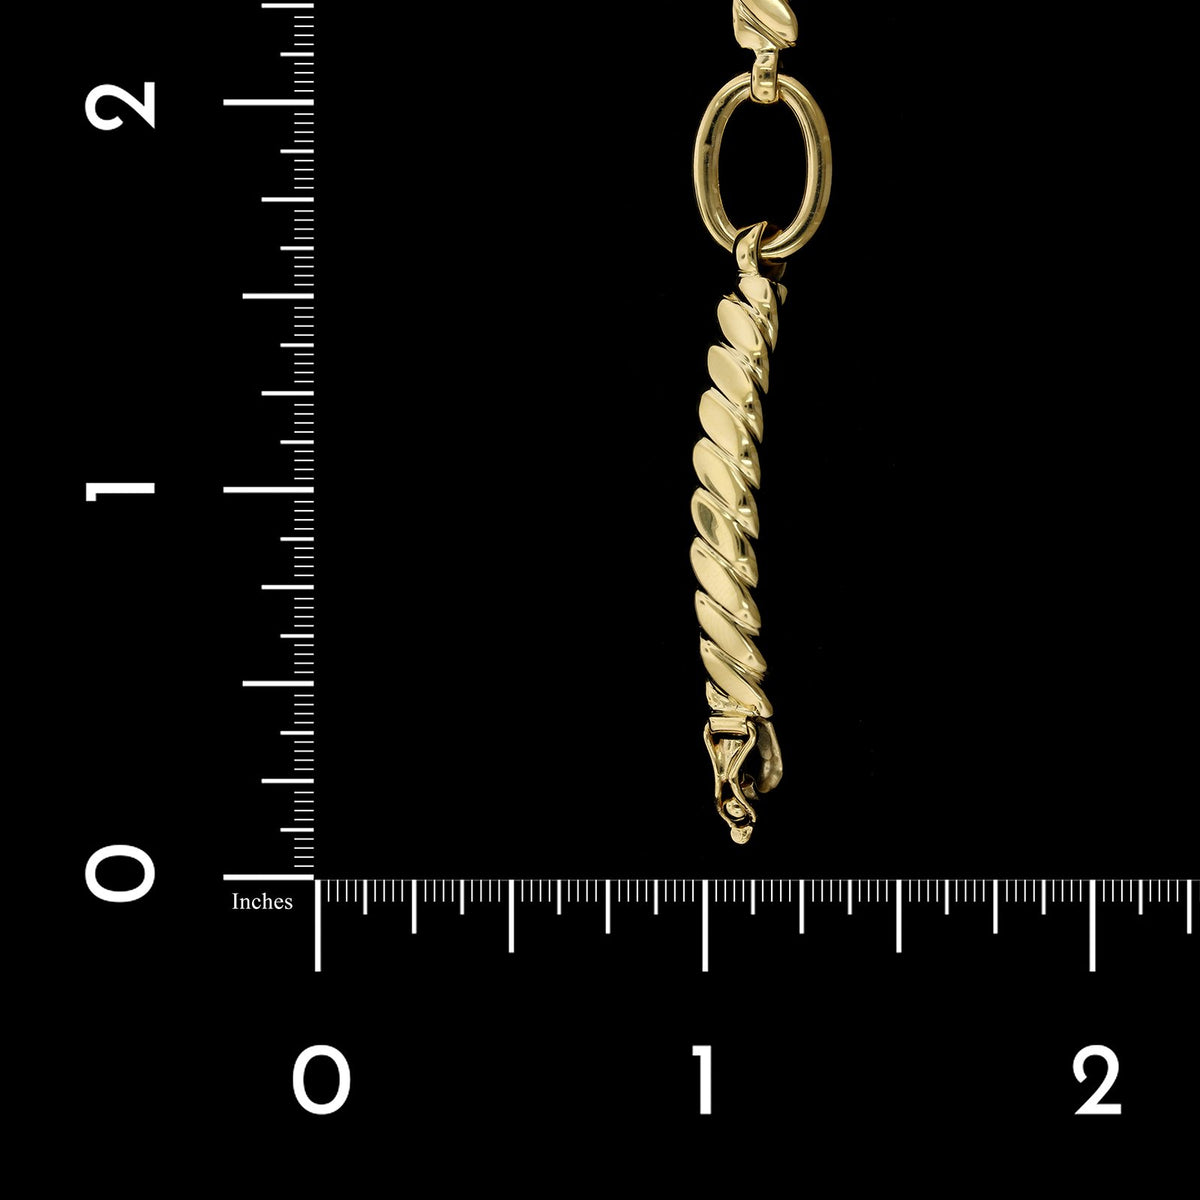 18K Yellow Gold Estate Bracelet, Gold, Long's Jewelers